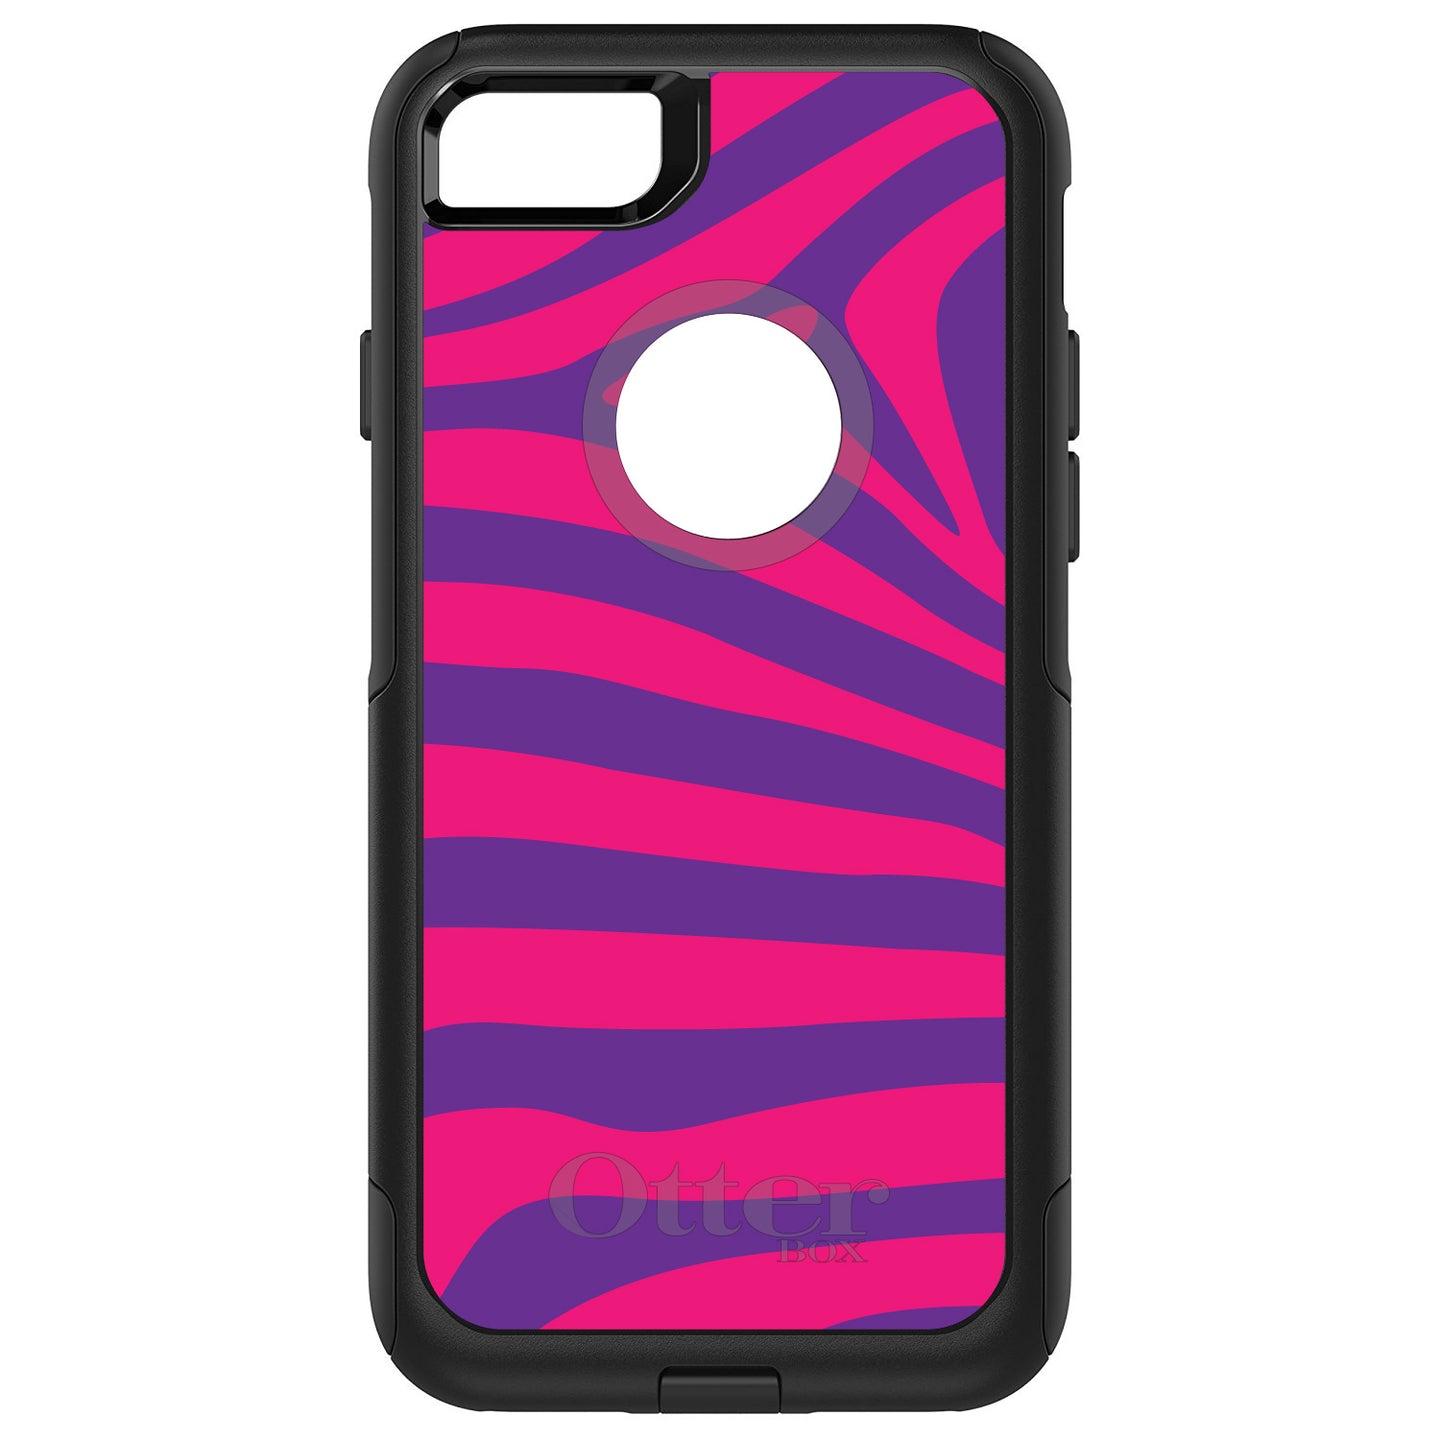 DistinctInk™ OtterBox Commuter Series Case for Apple iPhone or Samsung Galaxy - Purple Hot Pink Zebra Skin Stripes